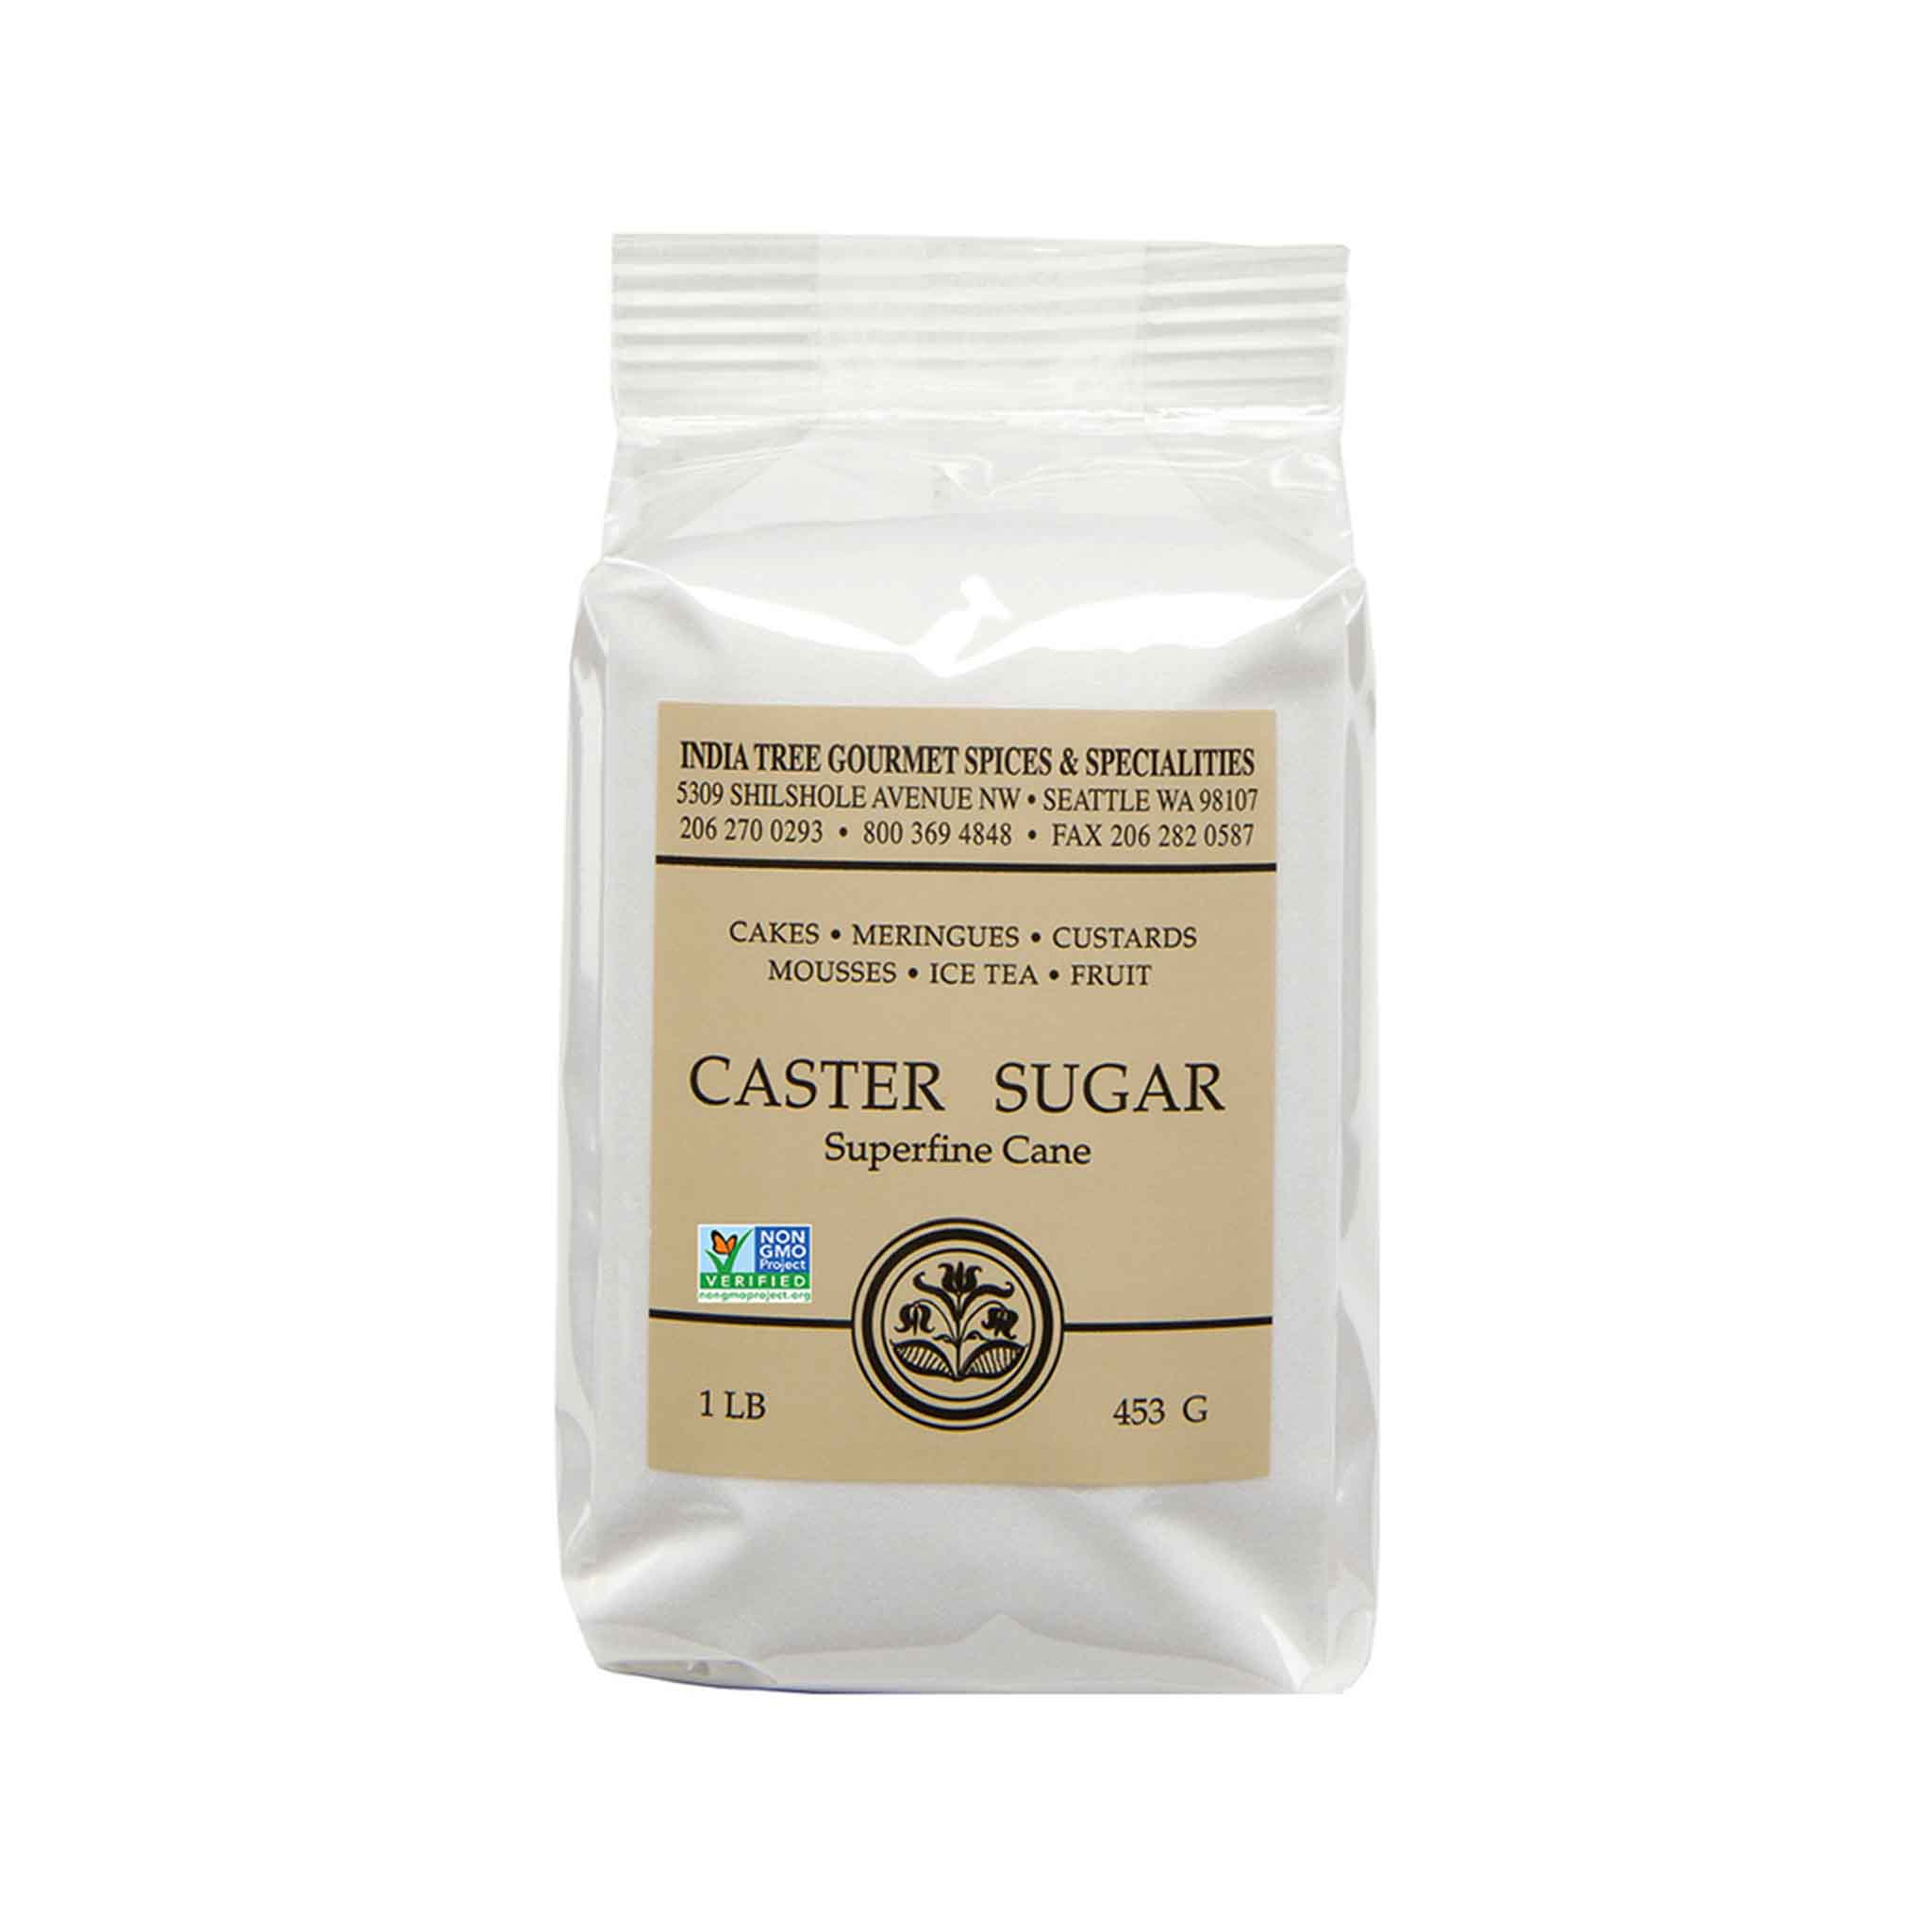 Caster Sugar for Baking